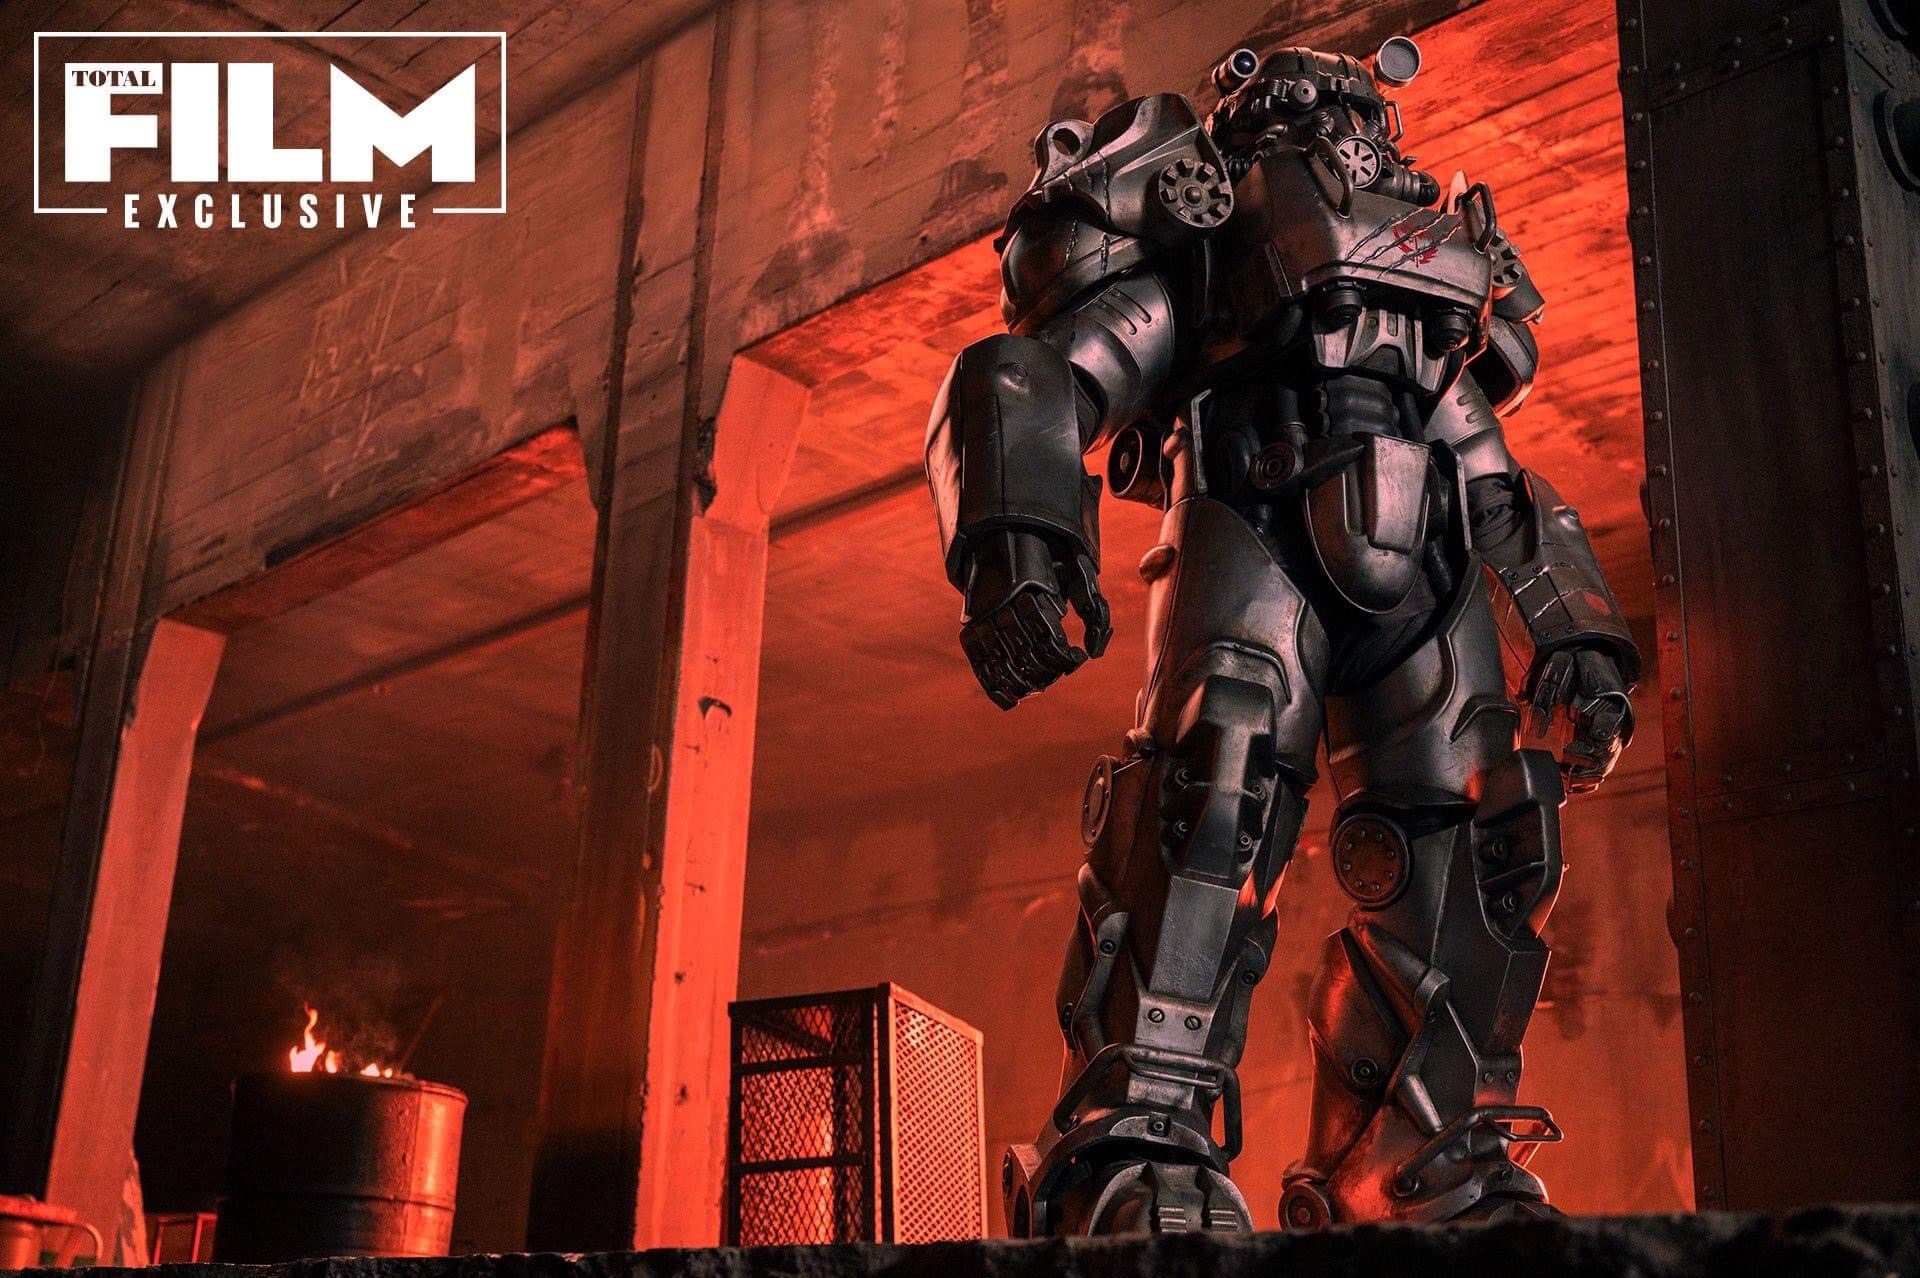 Fallout promo image - Brotherhood of Steel